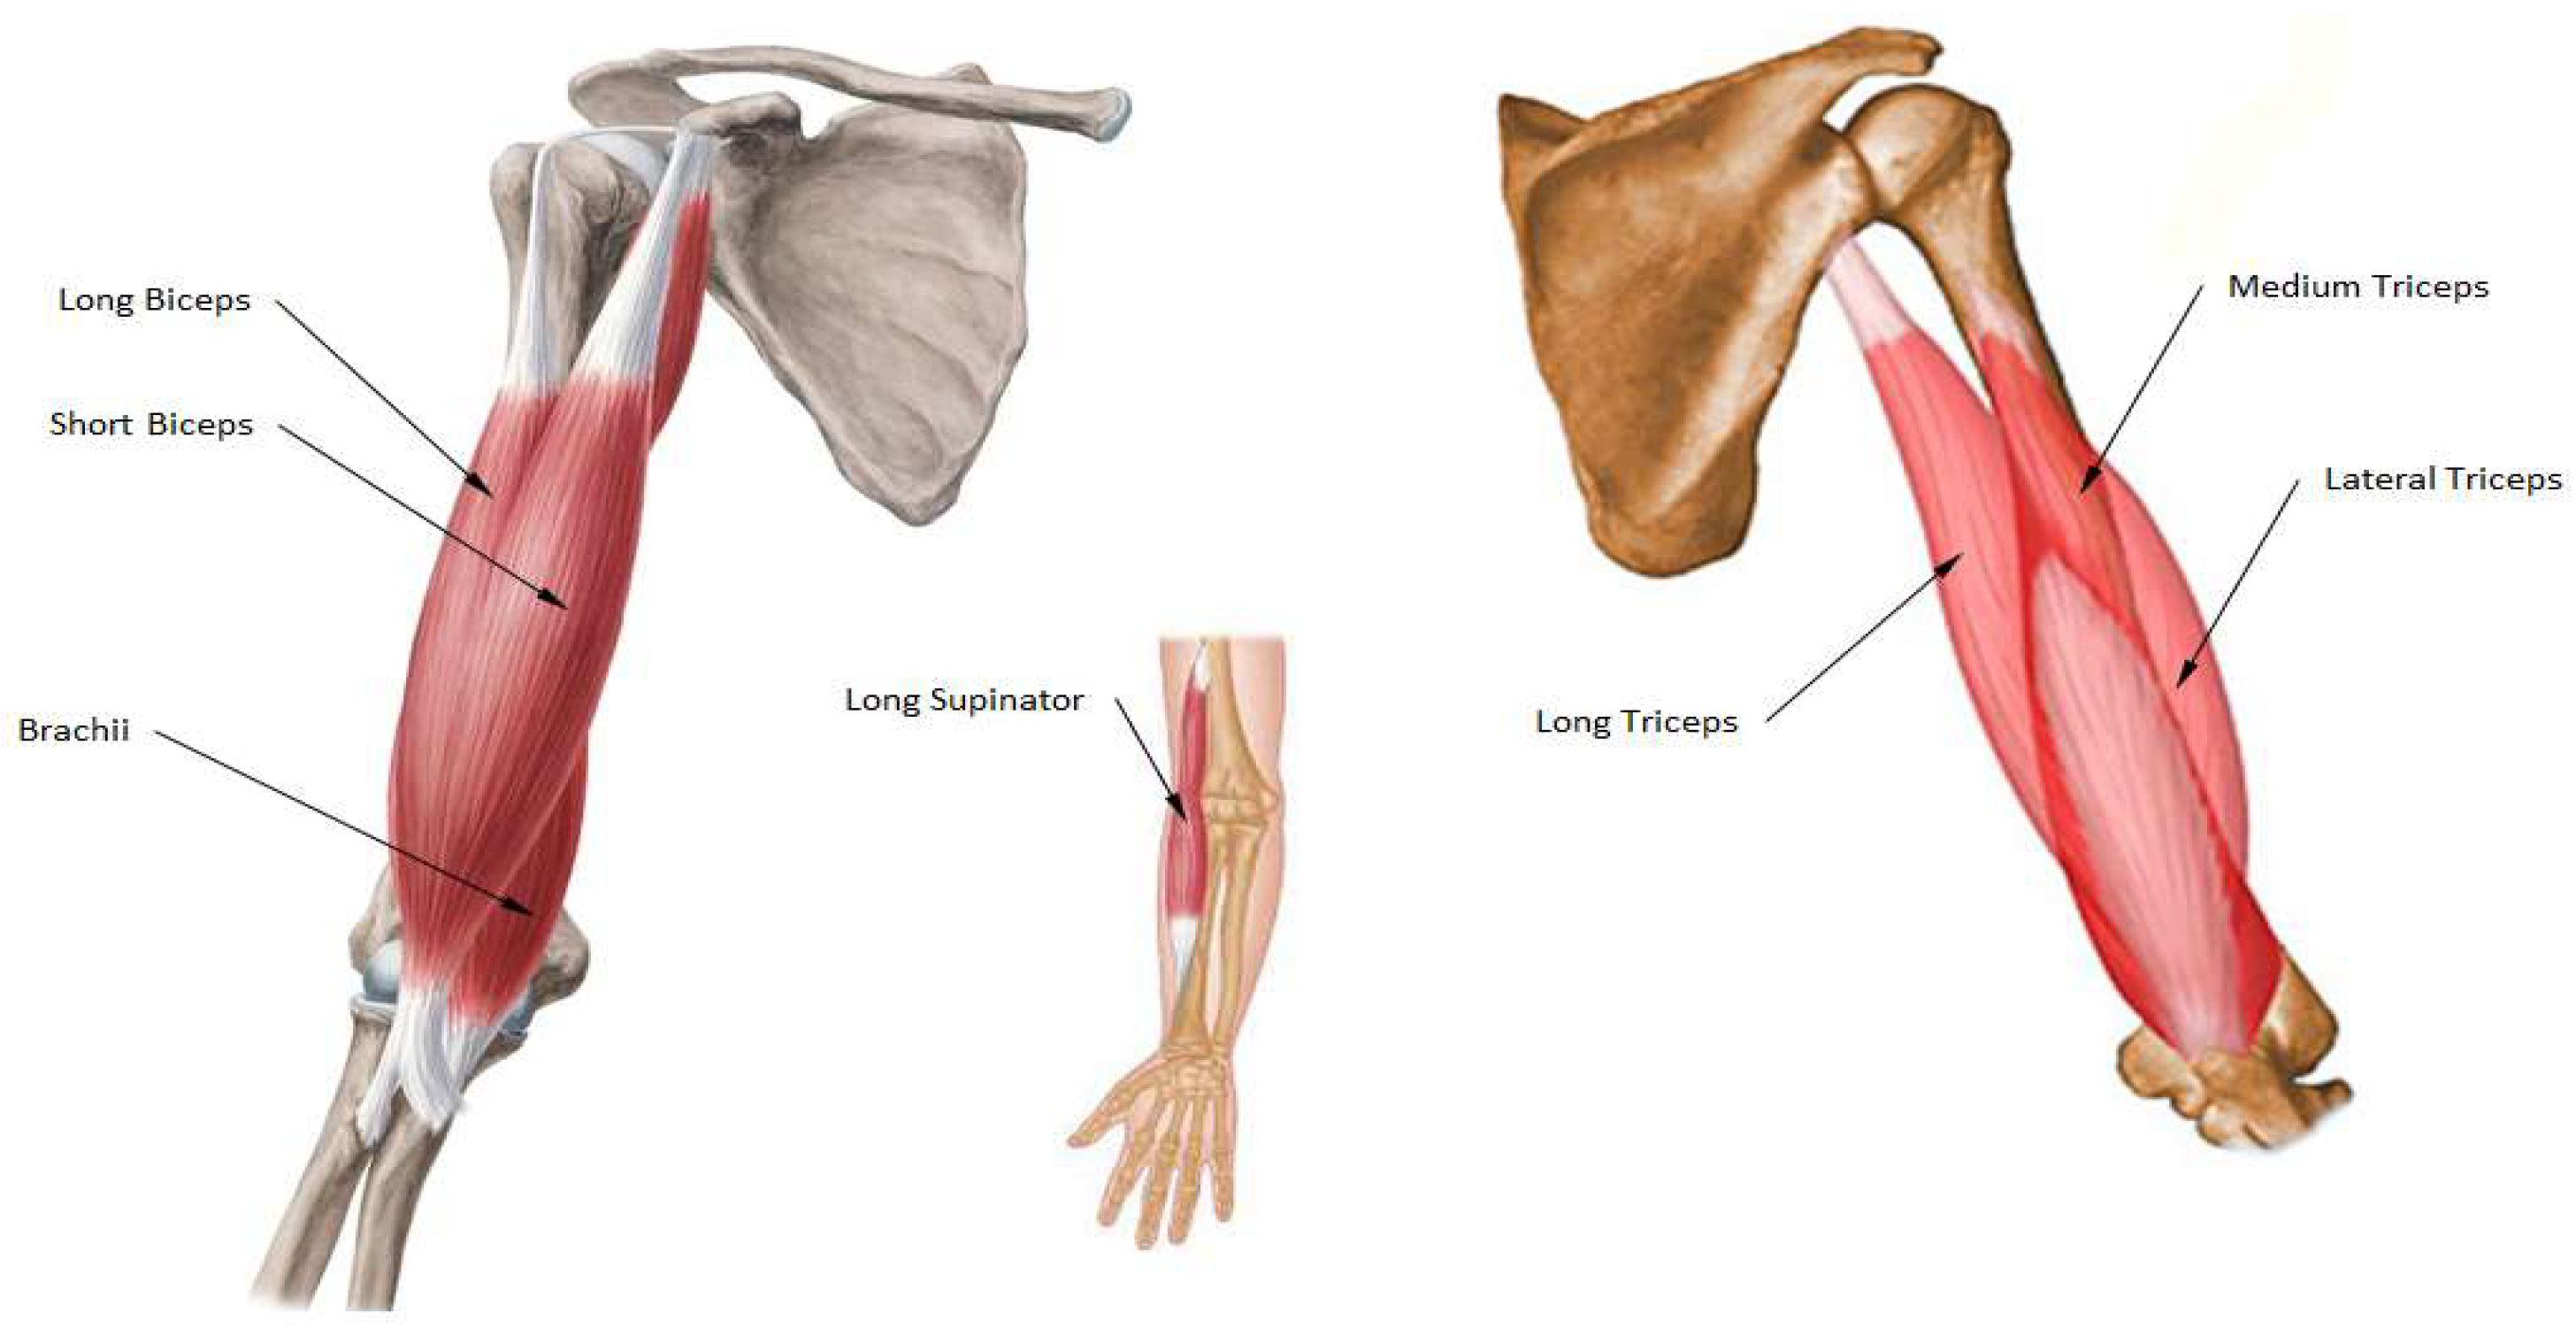 Triceps Anatomy, Origin & Function